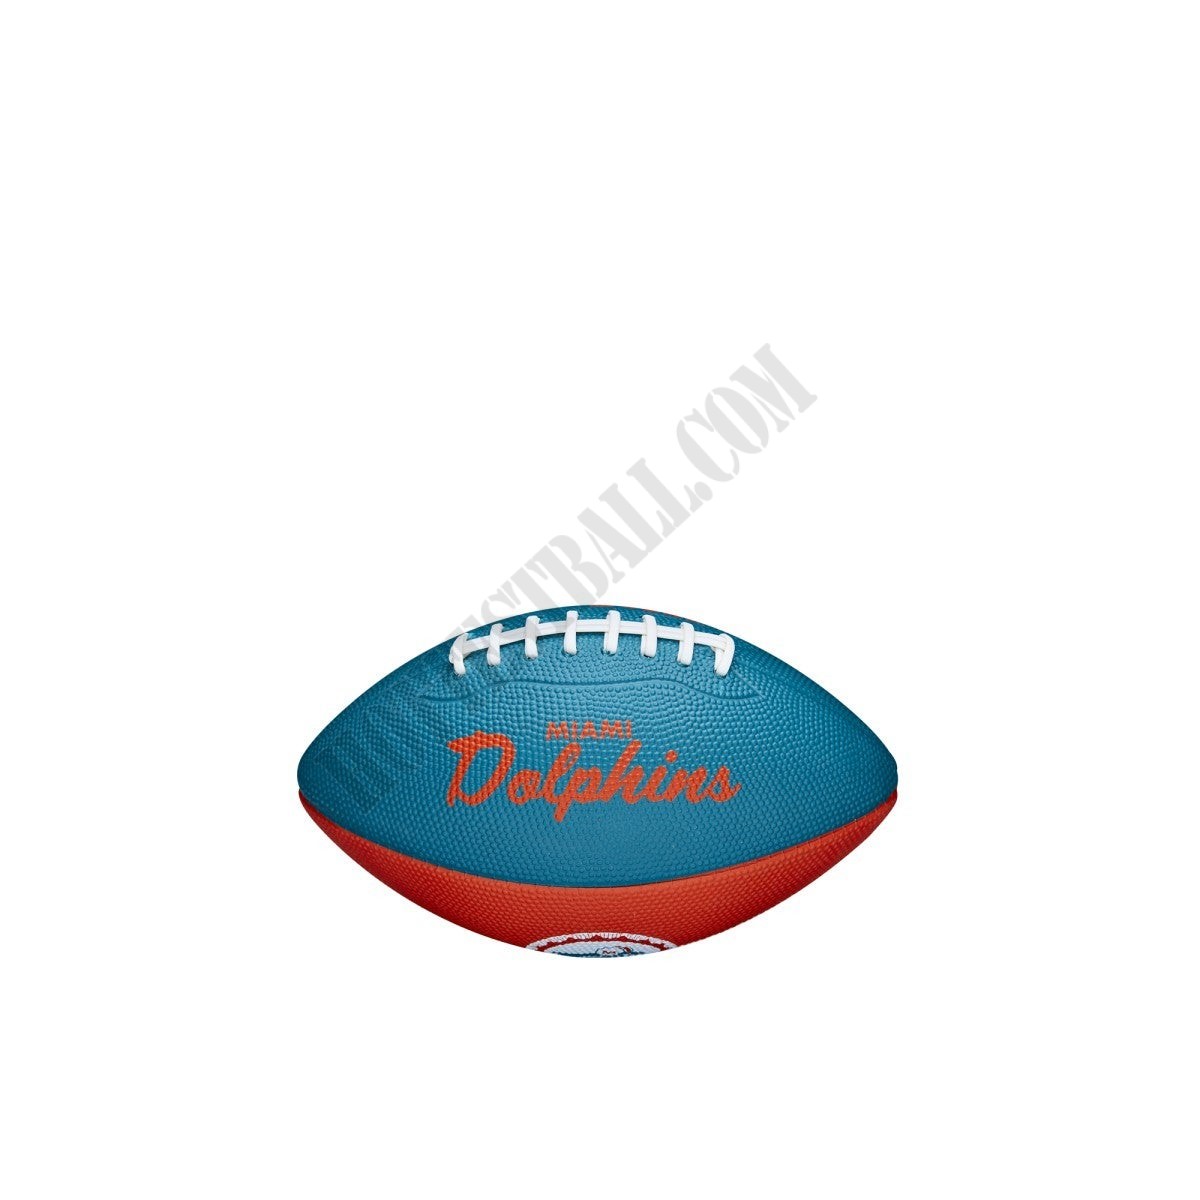 NFL Retro Mini Football - Miami Dolphins ● Wilson Promotions - NFL Retro Mini Football - Miami Dolphins ● Wilson Promotions